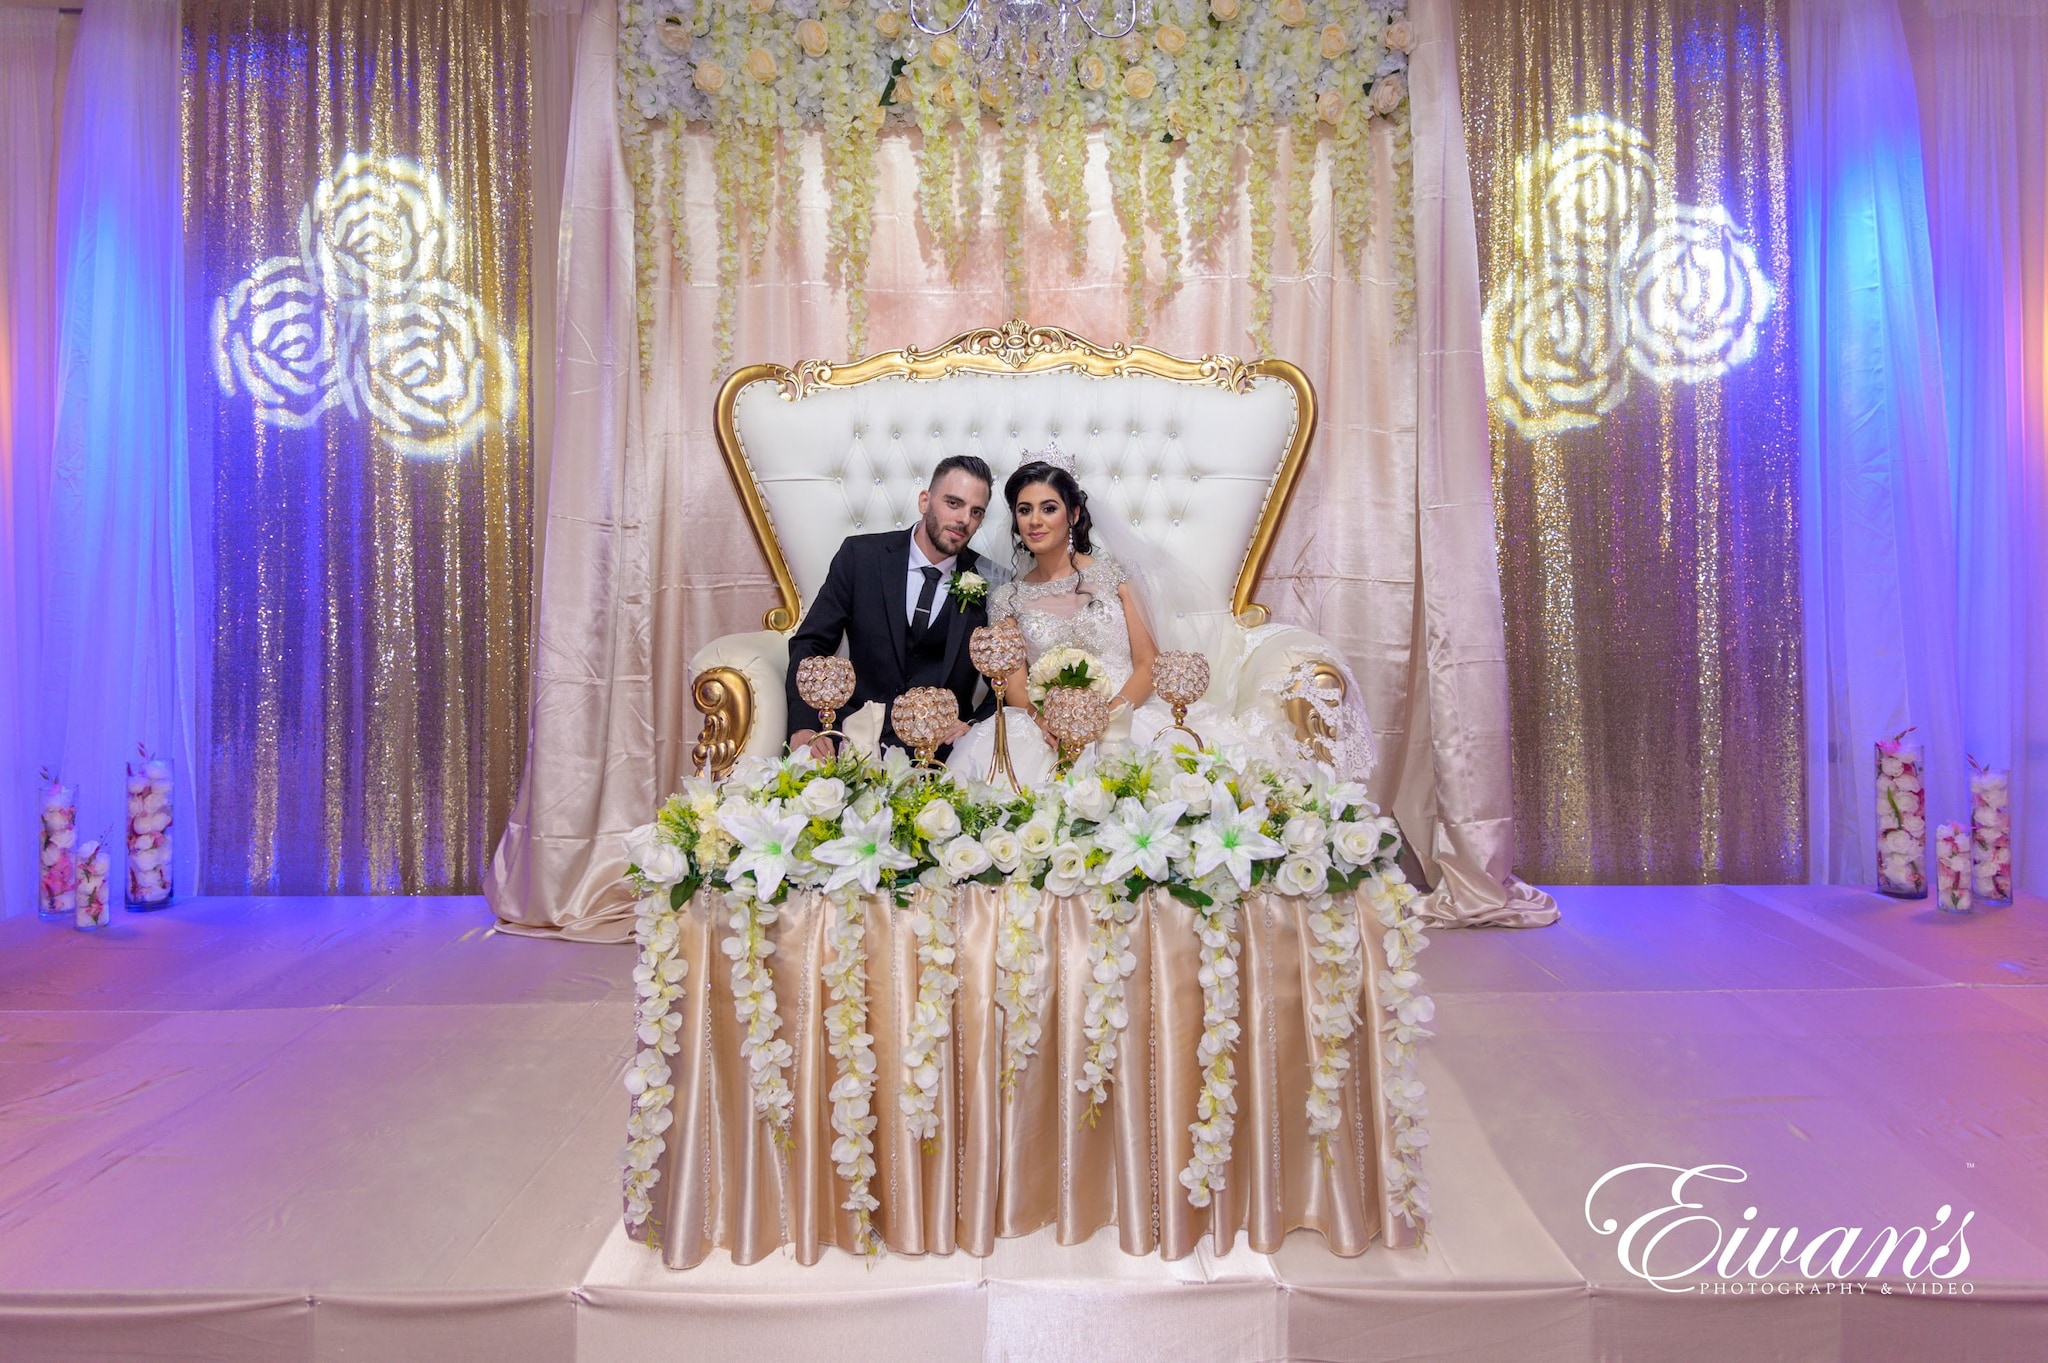 December weddings - Eivan's Photo Inc. | Wedding Photography & Video